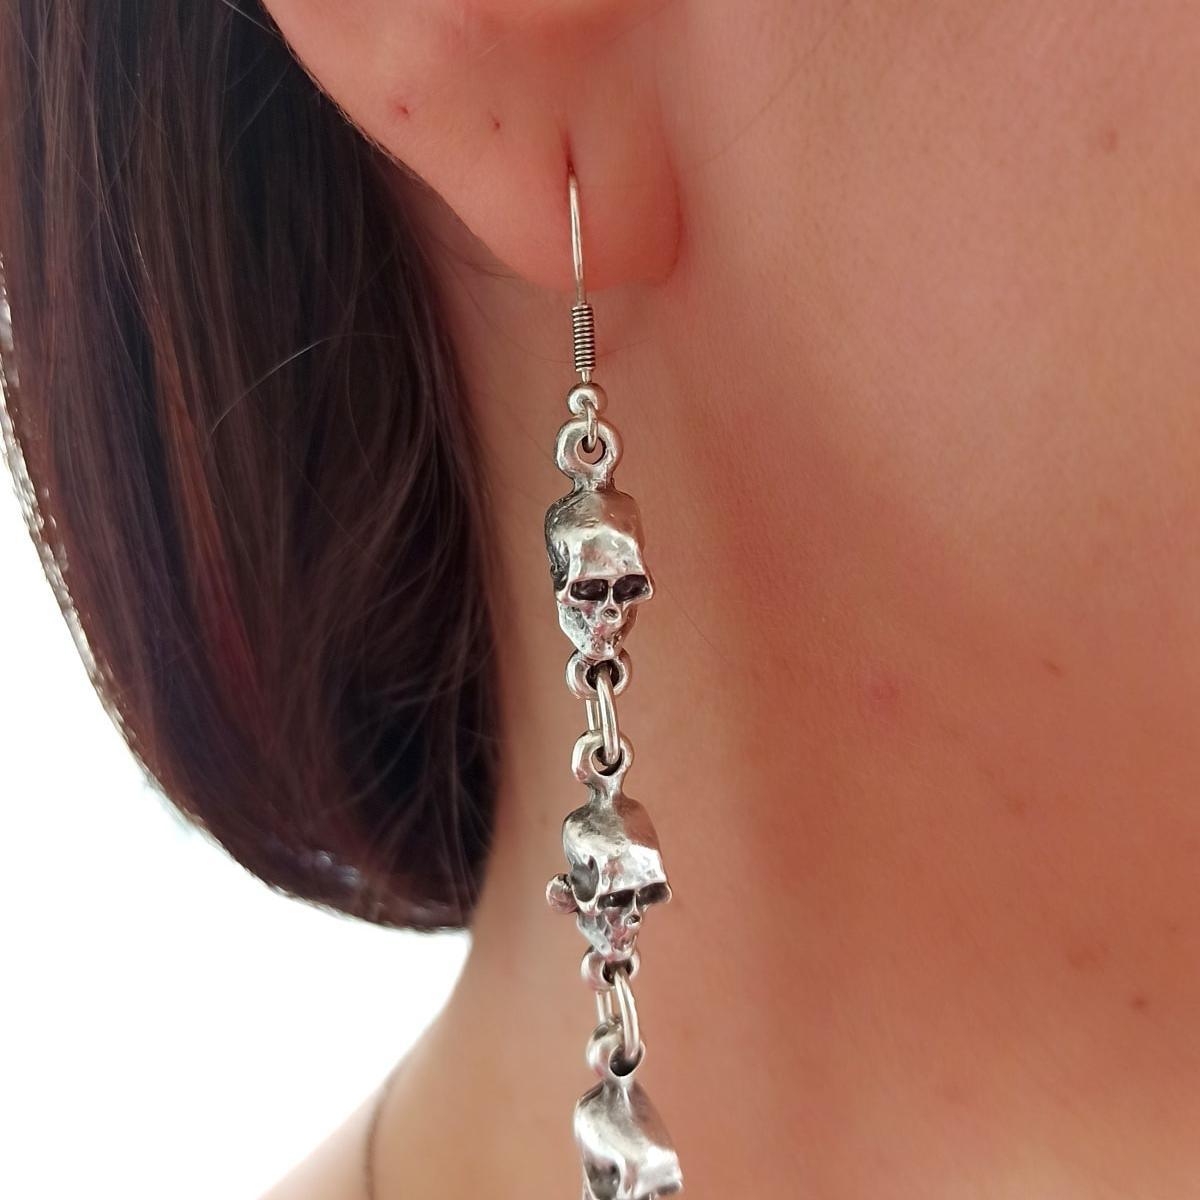 Silver Skull Earrings • Skull Earrings Dangle • Skull Drop Earrings - Trending Silver Gifts